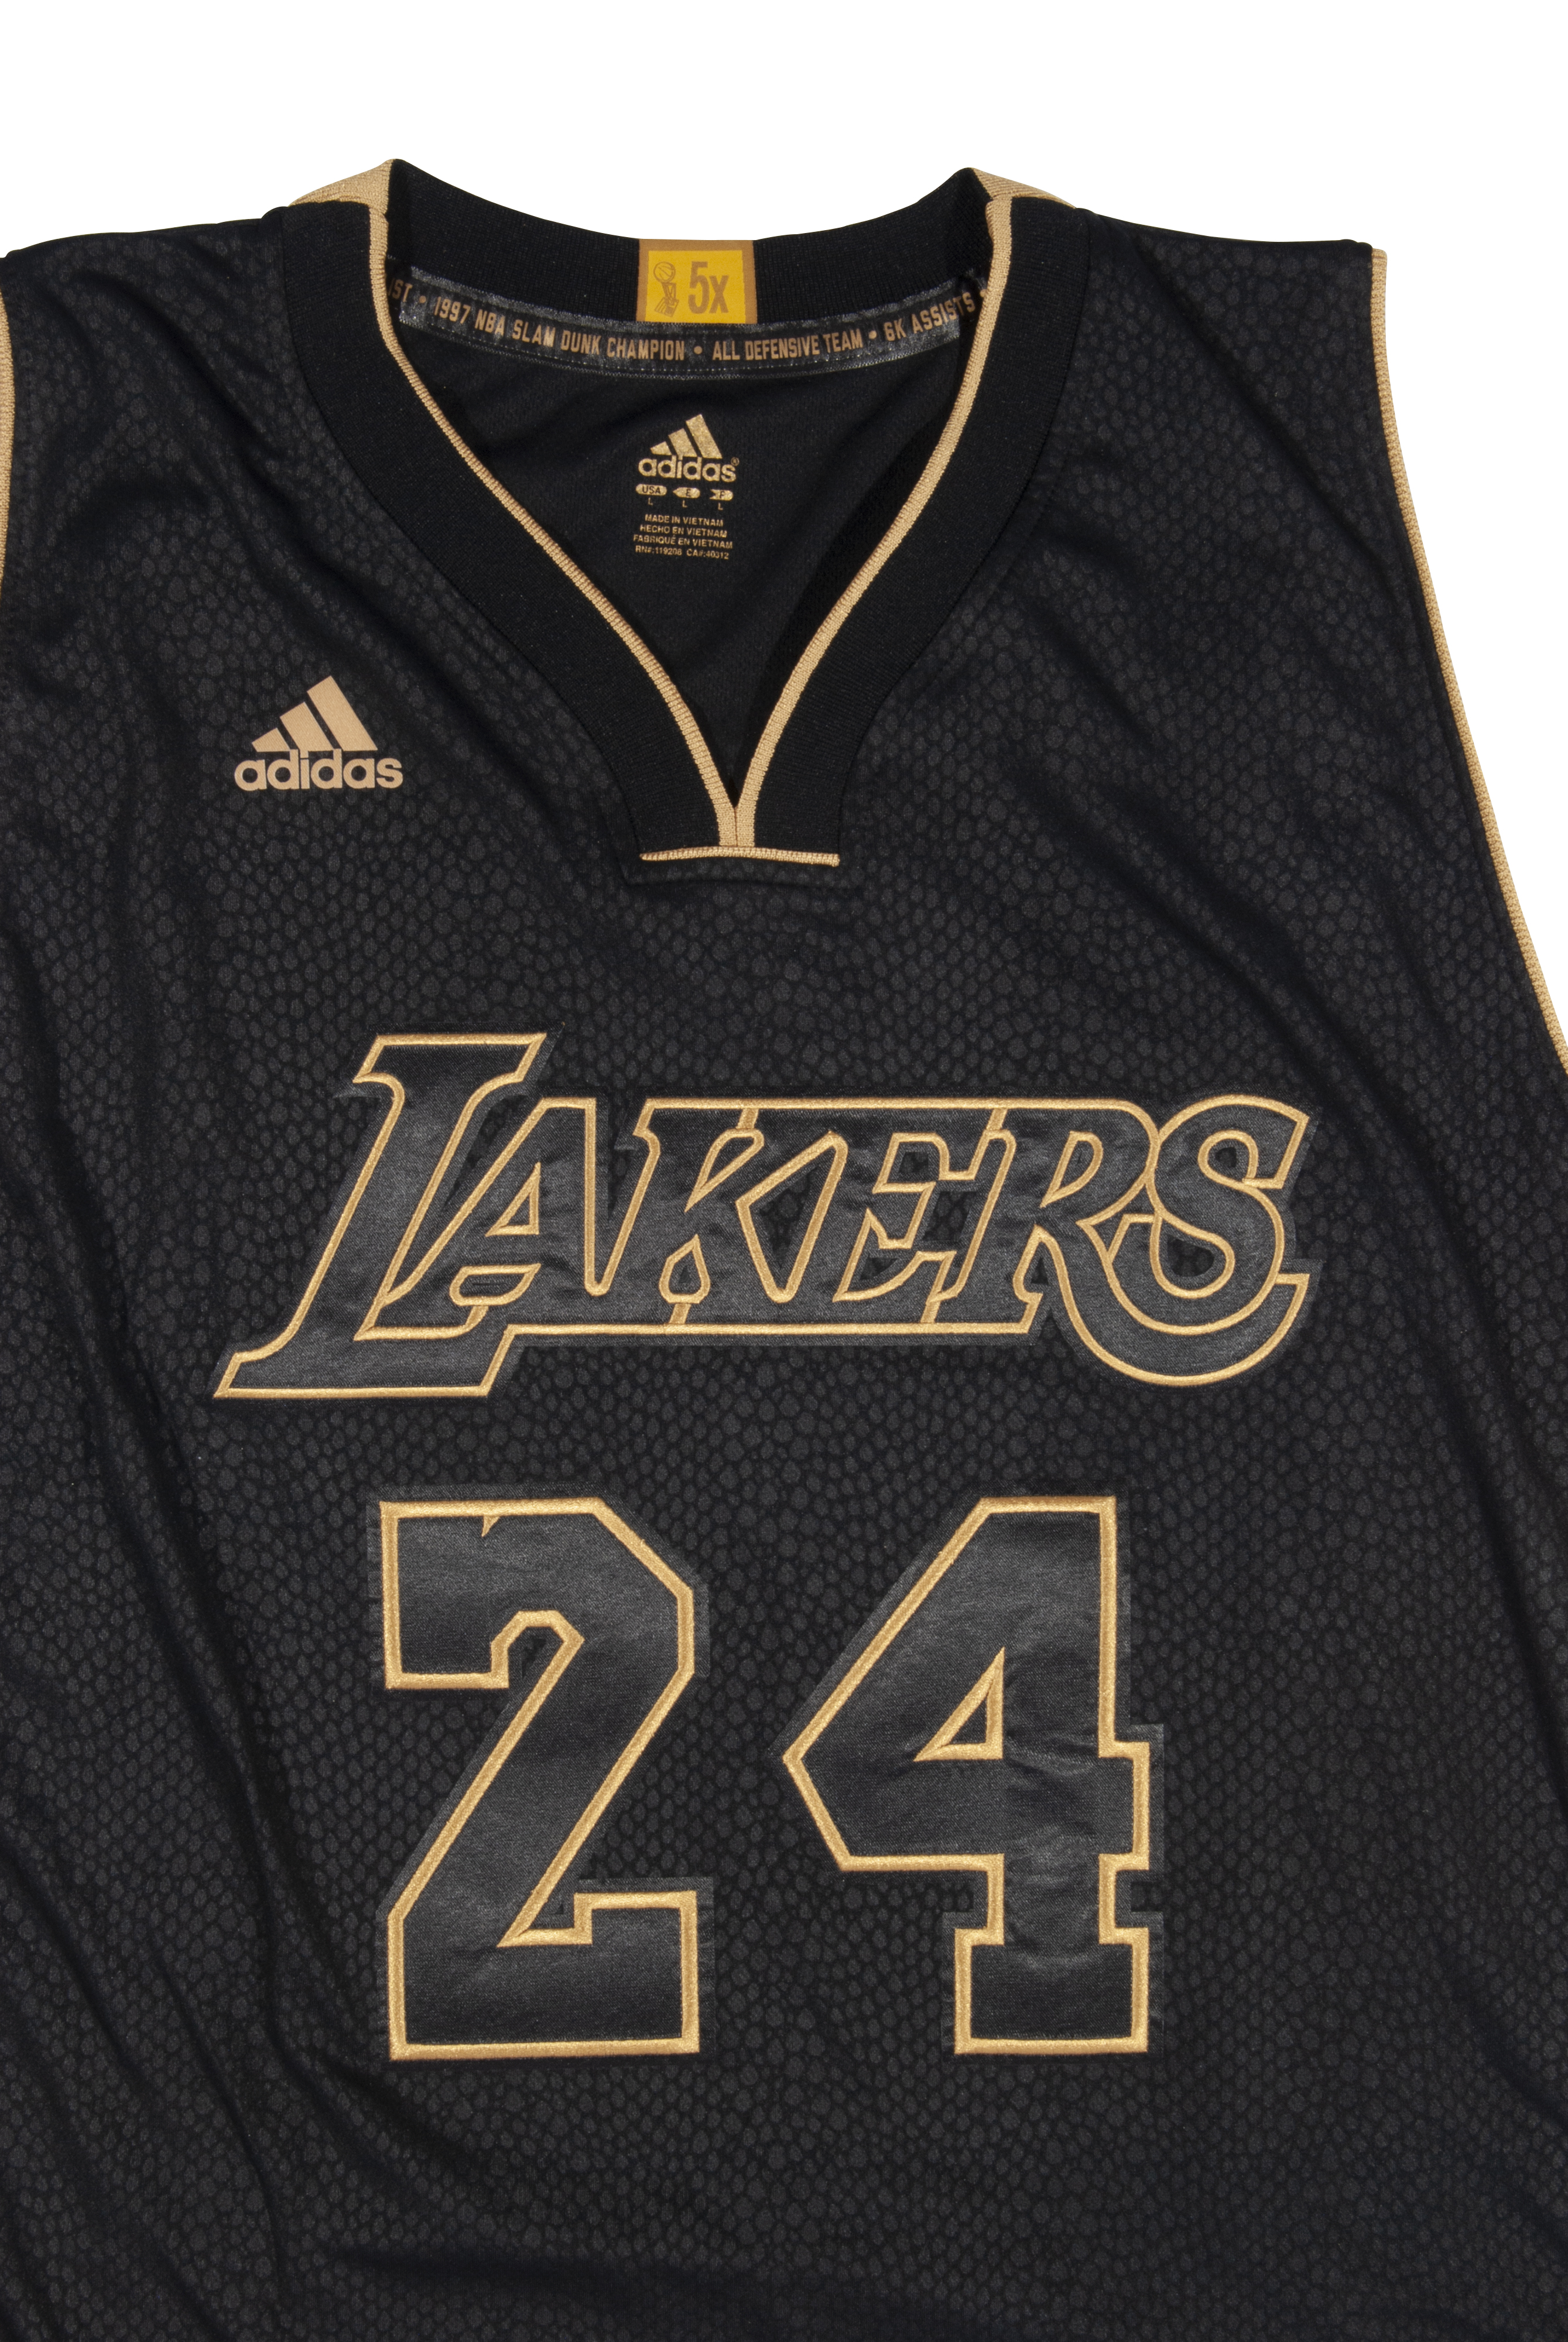 adidas, Shirts, Kobe Bryant Xmas Day Lakers Jersey